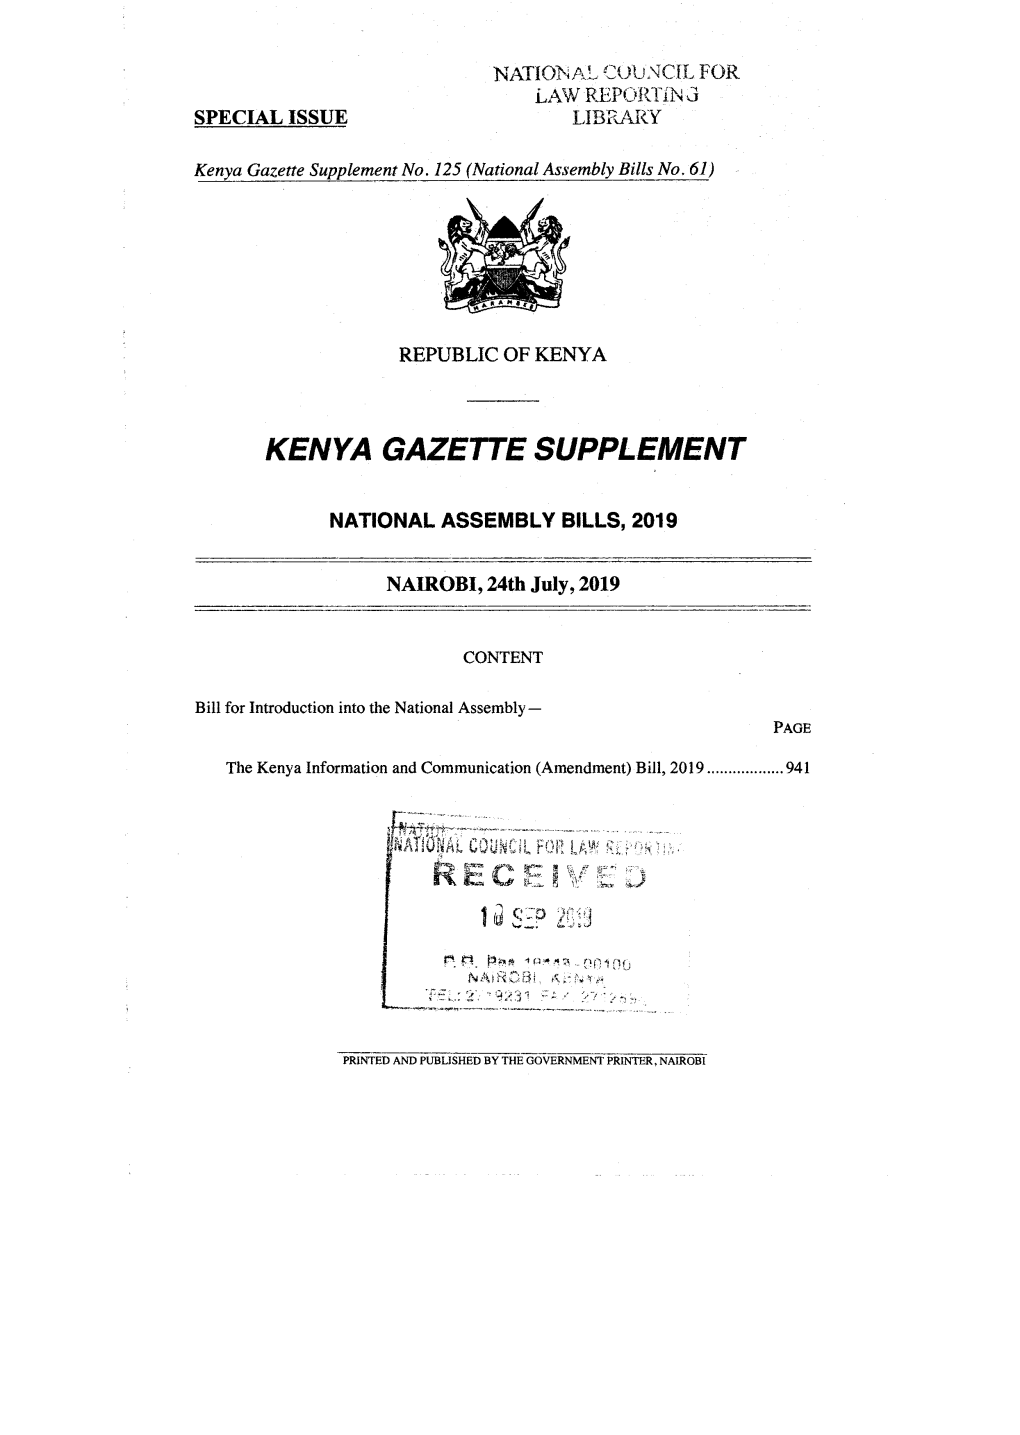 The Kenya Information and Communication (Amendment) Bill, 2019 �941